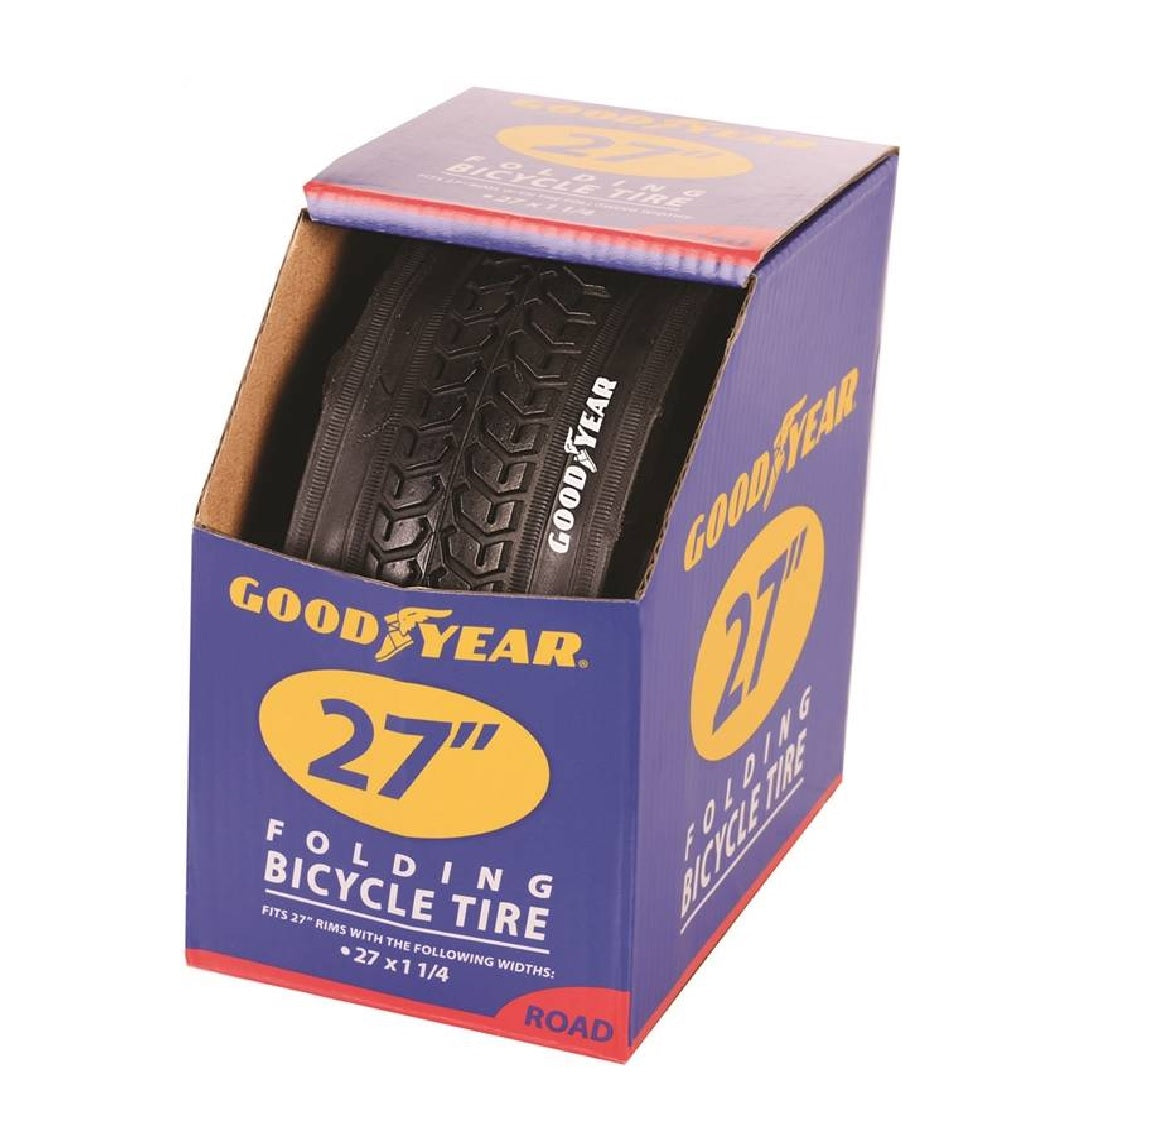 Goodyear 91128 27" Folding Road Tire, Black